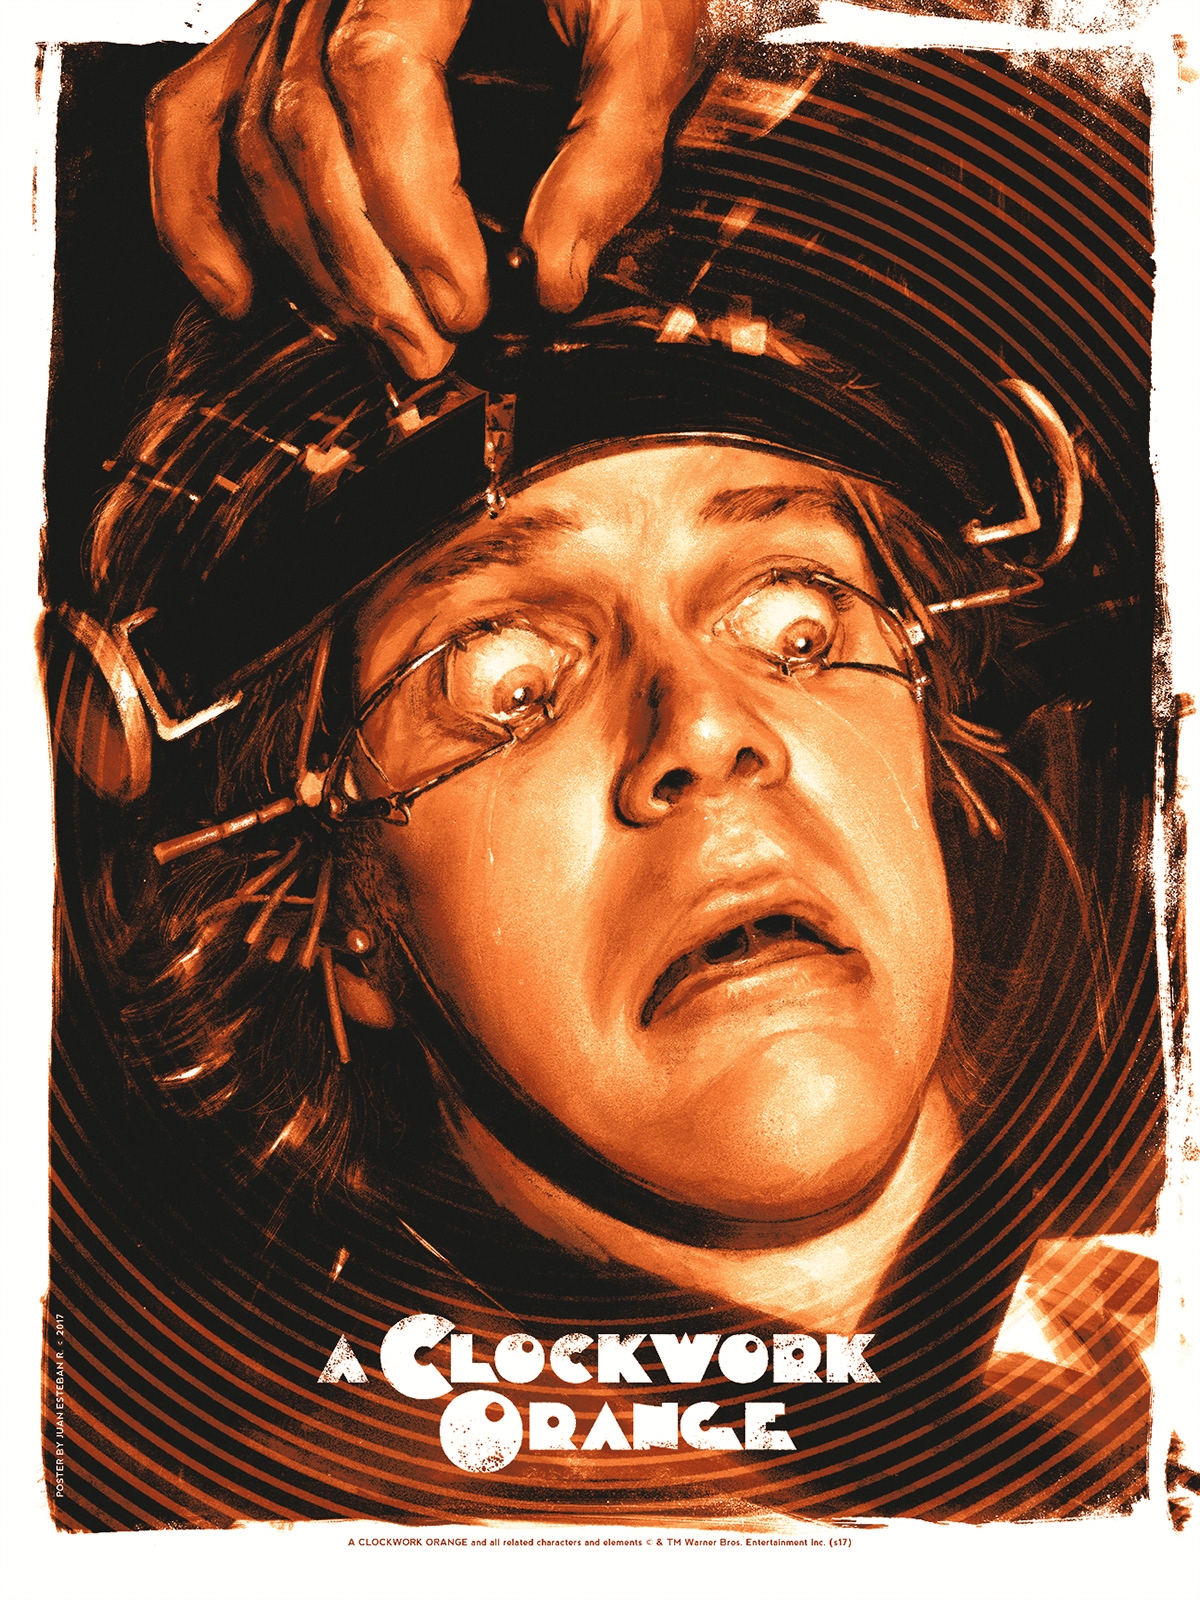 A Clockwork Orange Screen print on Behance